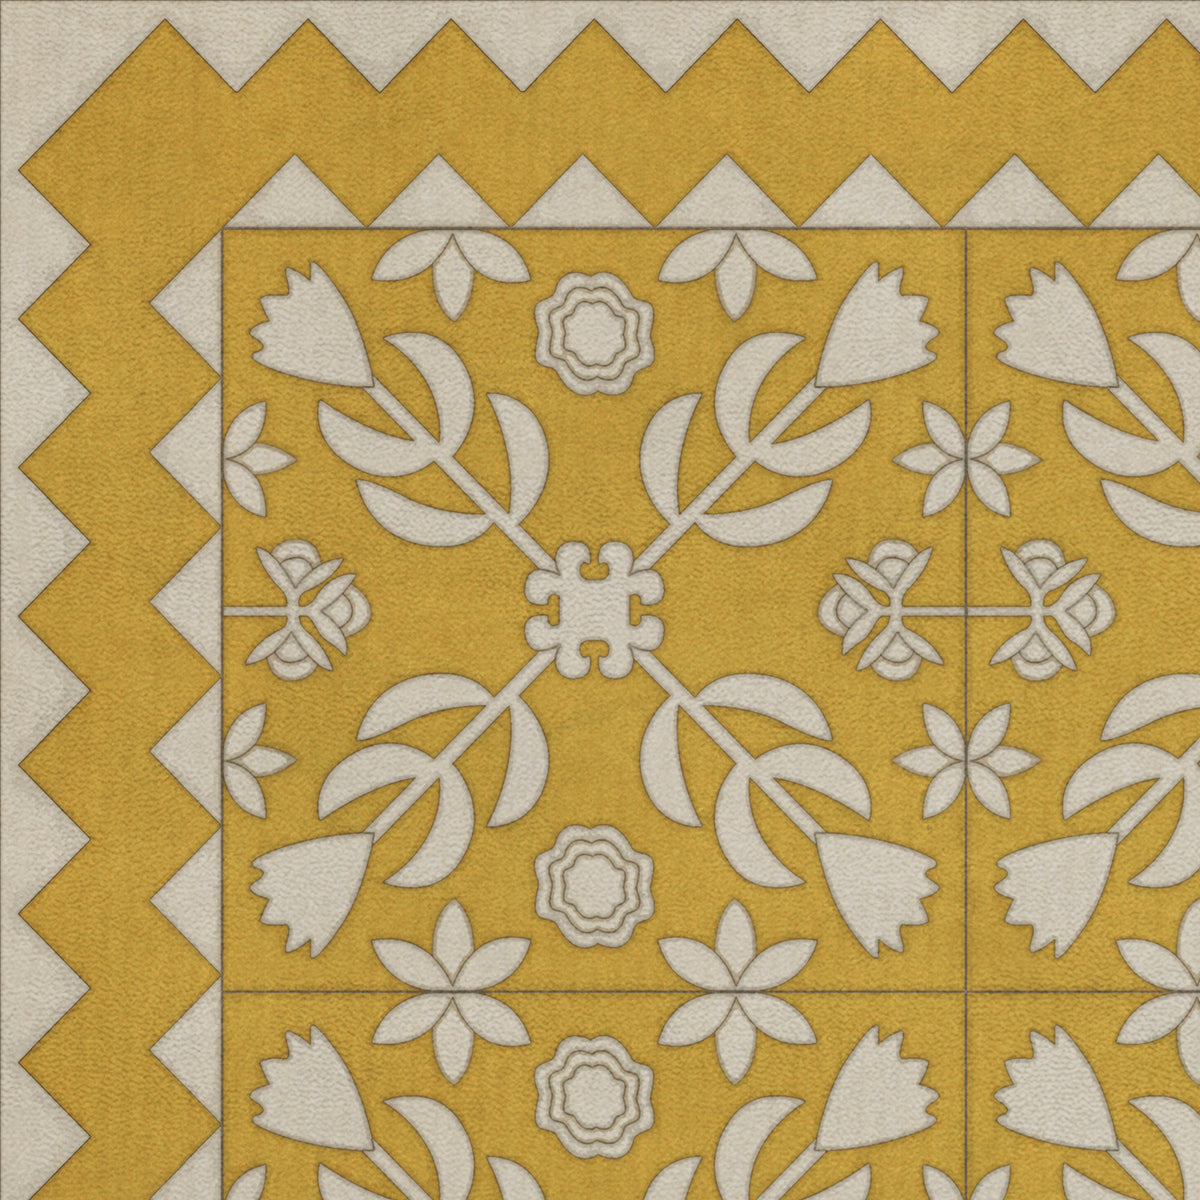 Folk Art Museum Floral Quilt AutumnMoon Vinyl Floor Cloth